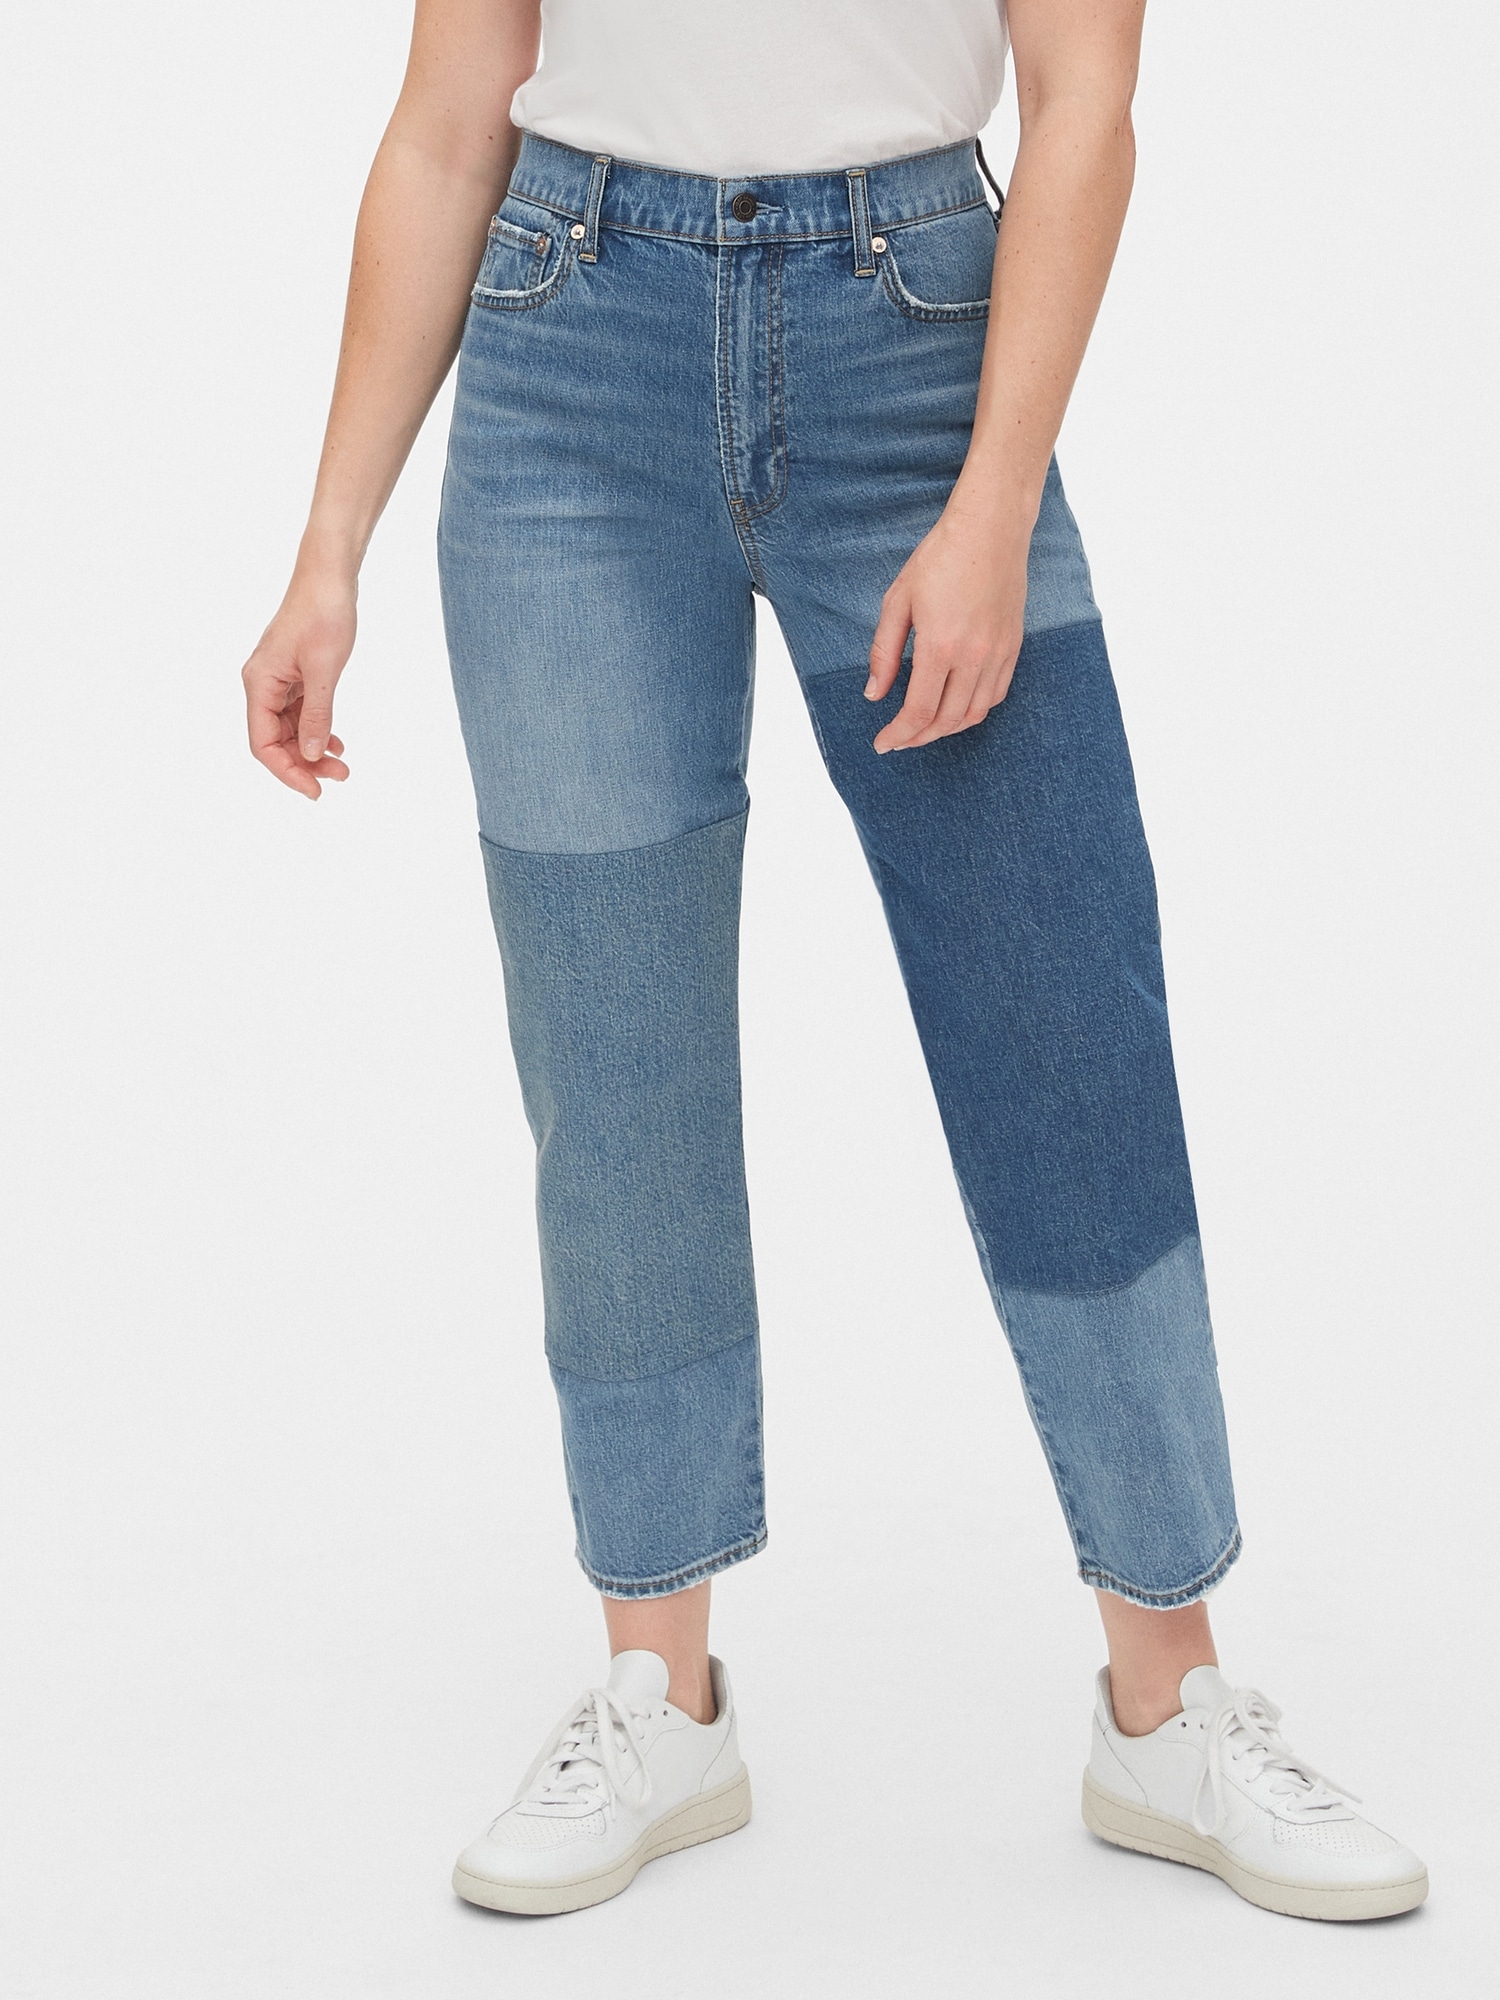 gap curvy straight jeans